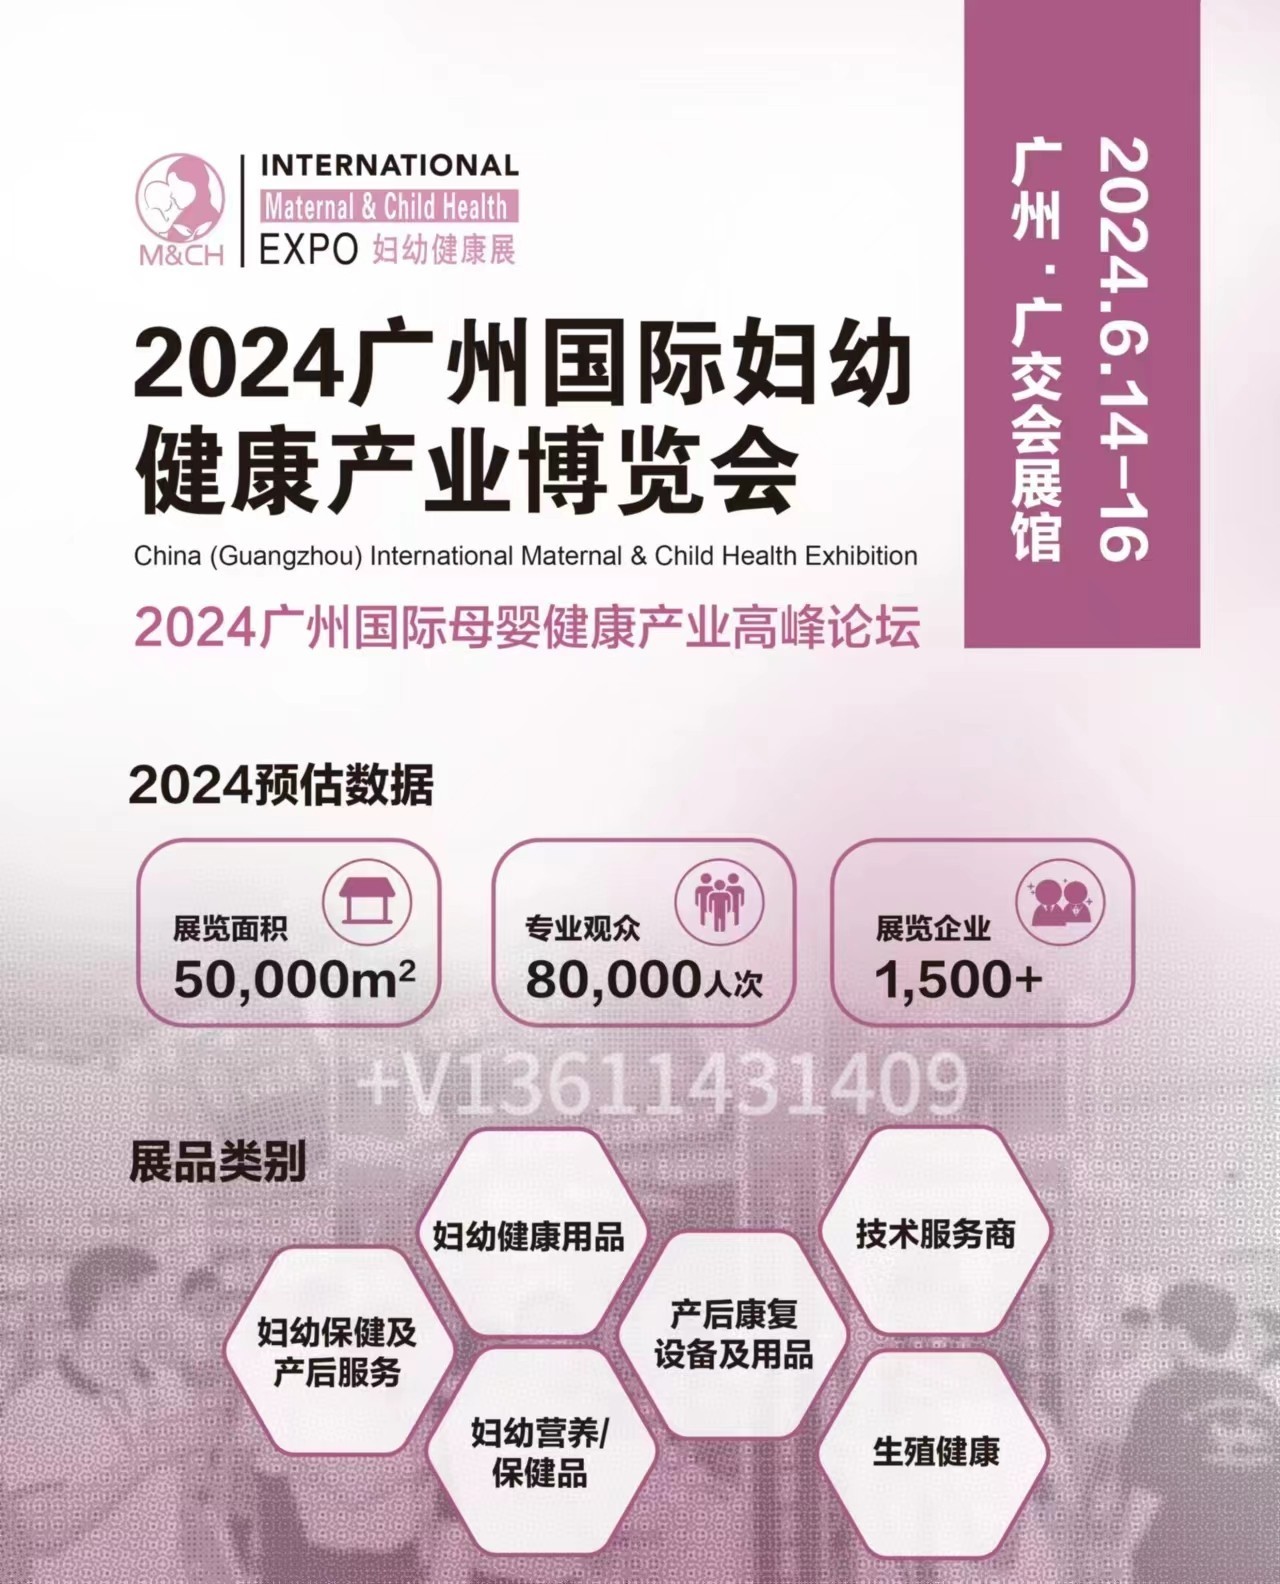 MCH 2024 Guangzhou Maternal and Child Health Exhibition | Maternal and Maternal Health Exhibition · Infant and Child Health Exhibition - www.globalomp.com